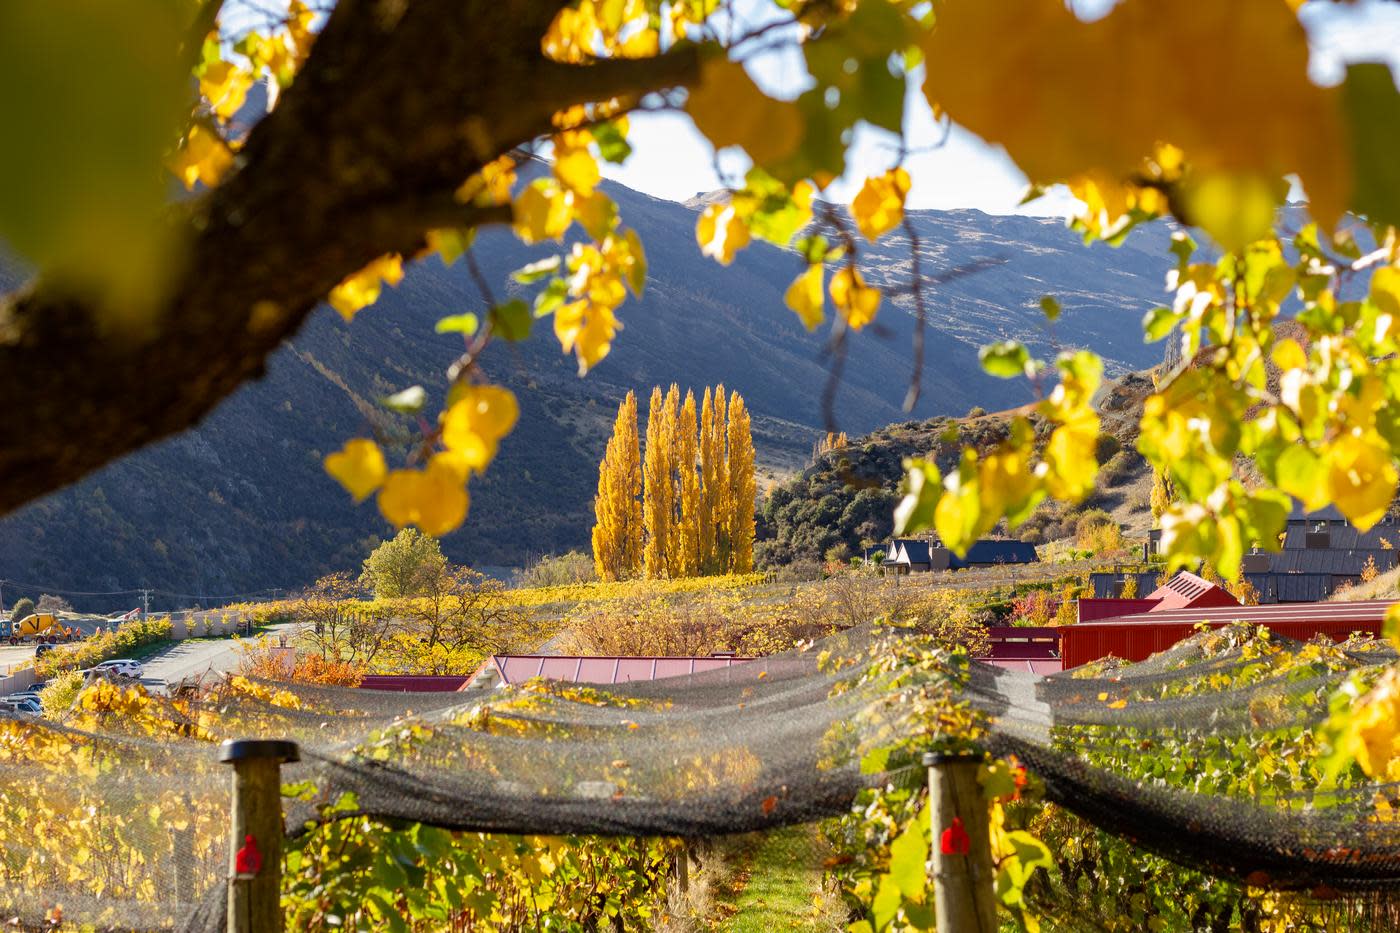 Vineyard with warm autumnal foliage